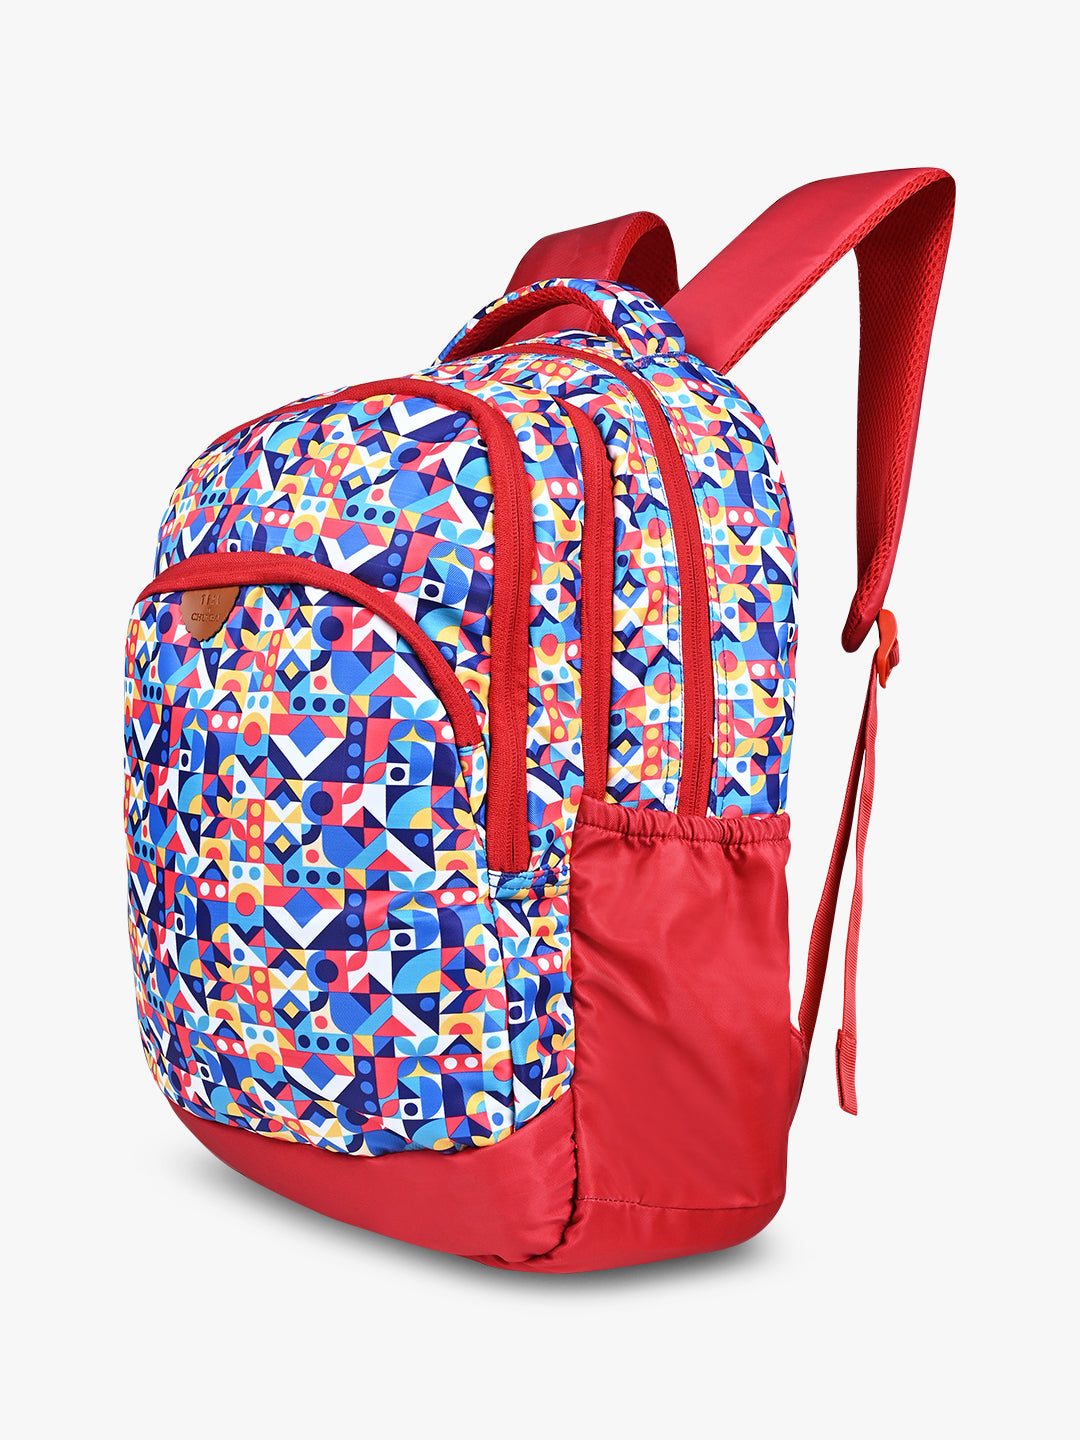 TEAL BY CHUMBAK Unisex Laptop Backpack | Crimson